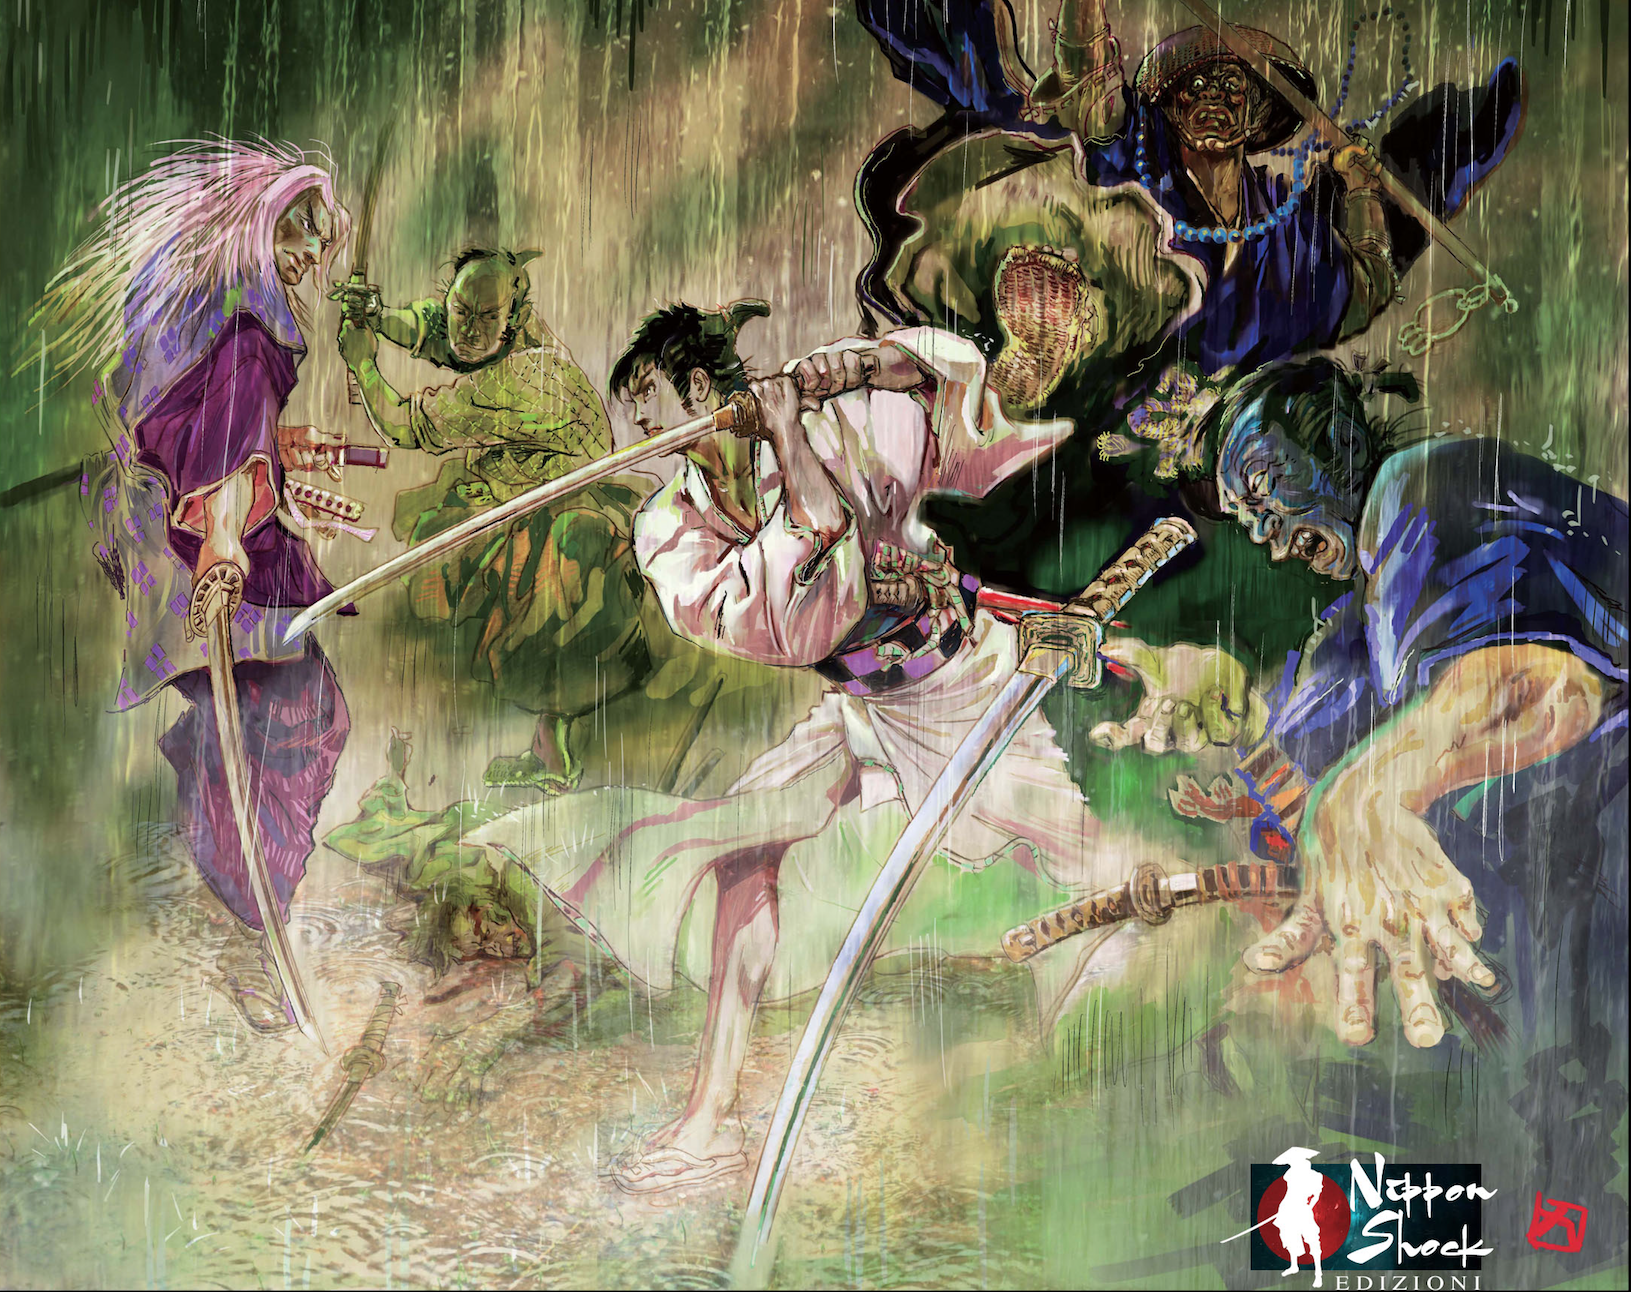 Il manga cult Kenshiro Tsubanari e la spada squartademoni approda in fumetteria